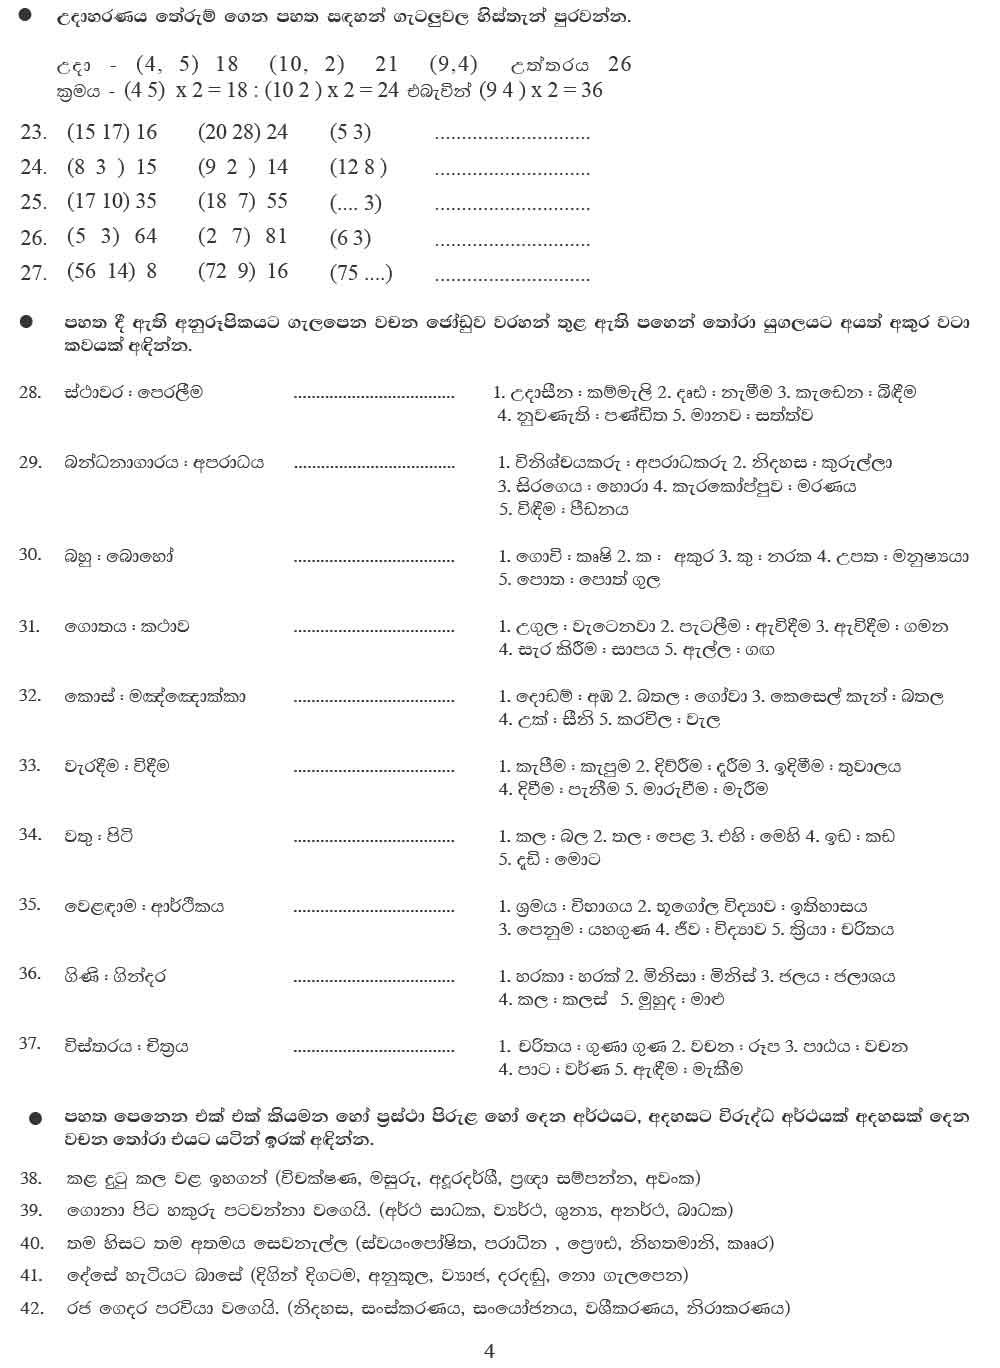 SLAS Pass Paper 10 by Anusha Gokula - General Knowledge in Sinhala 